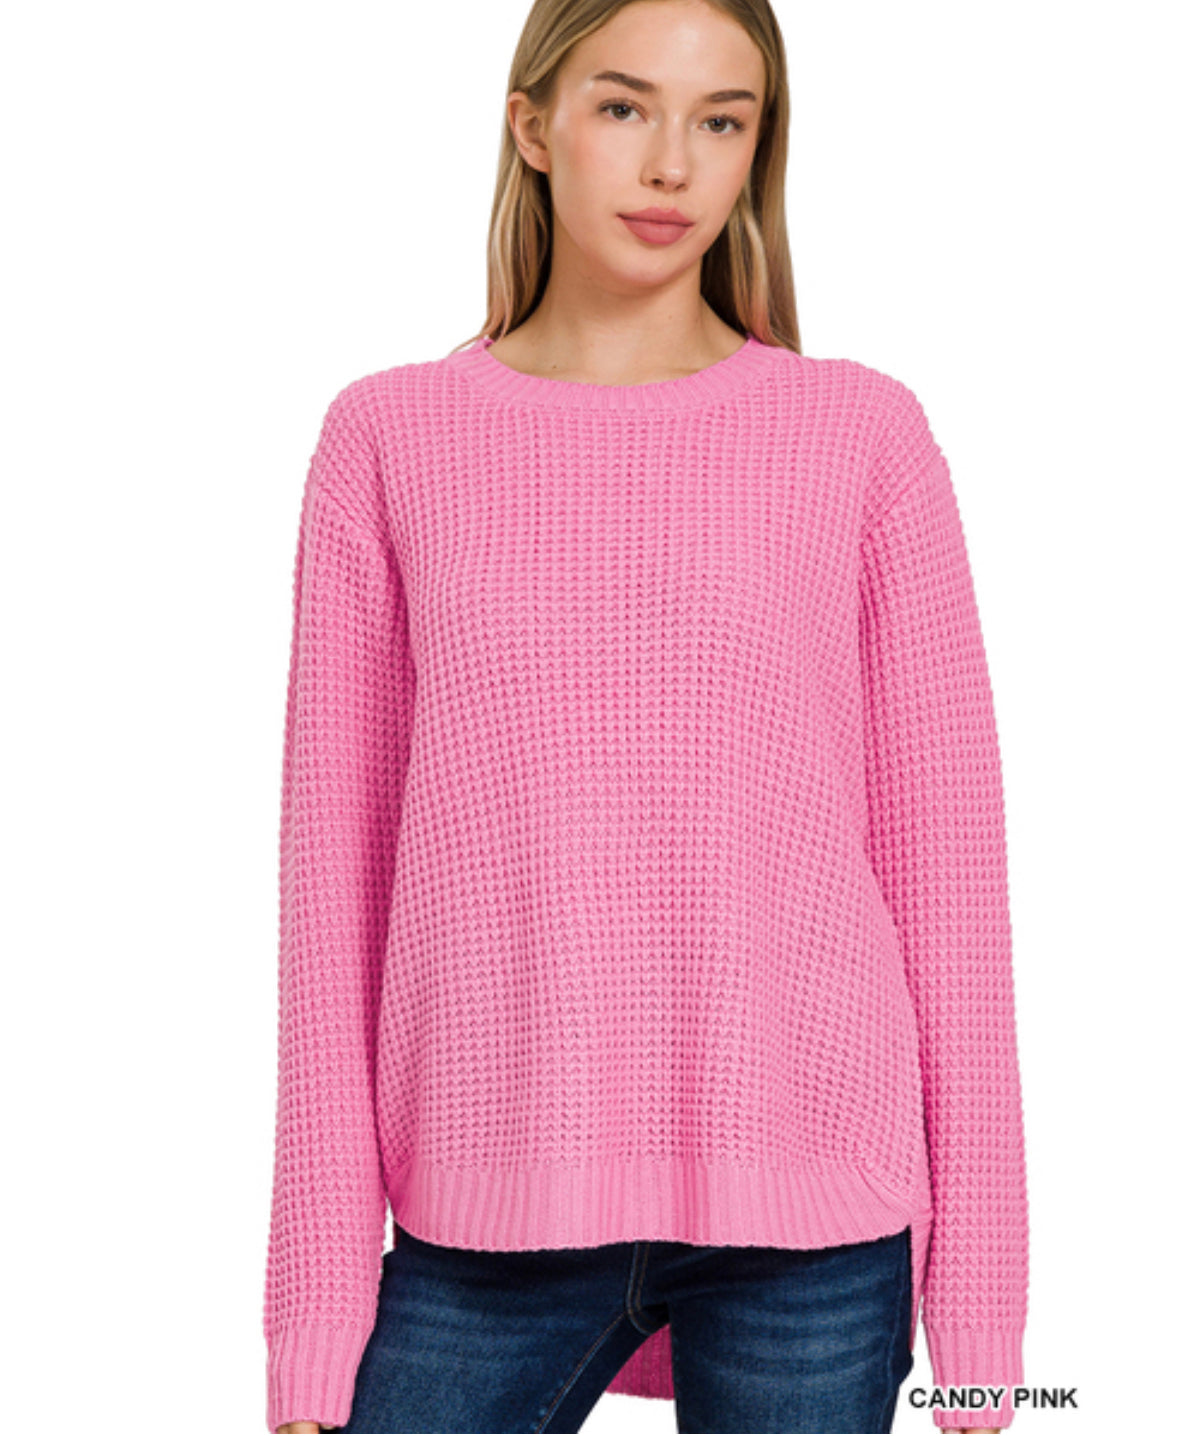 Moxi Waffle Knit Sweater in Candy Pink